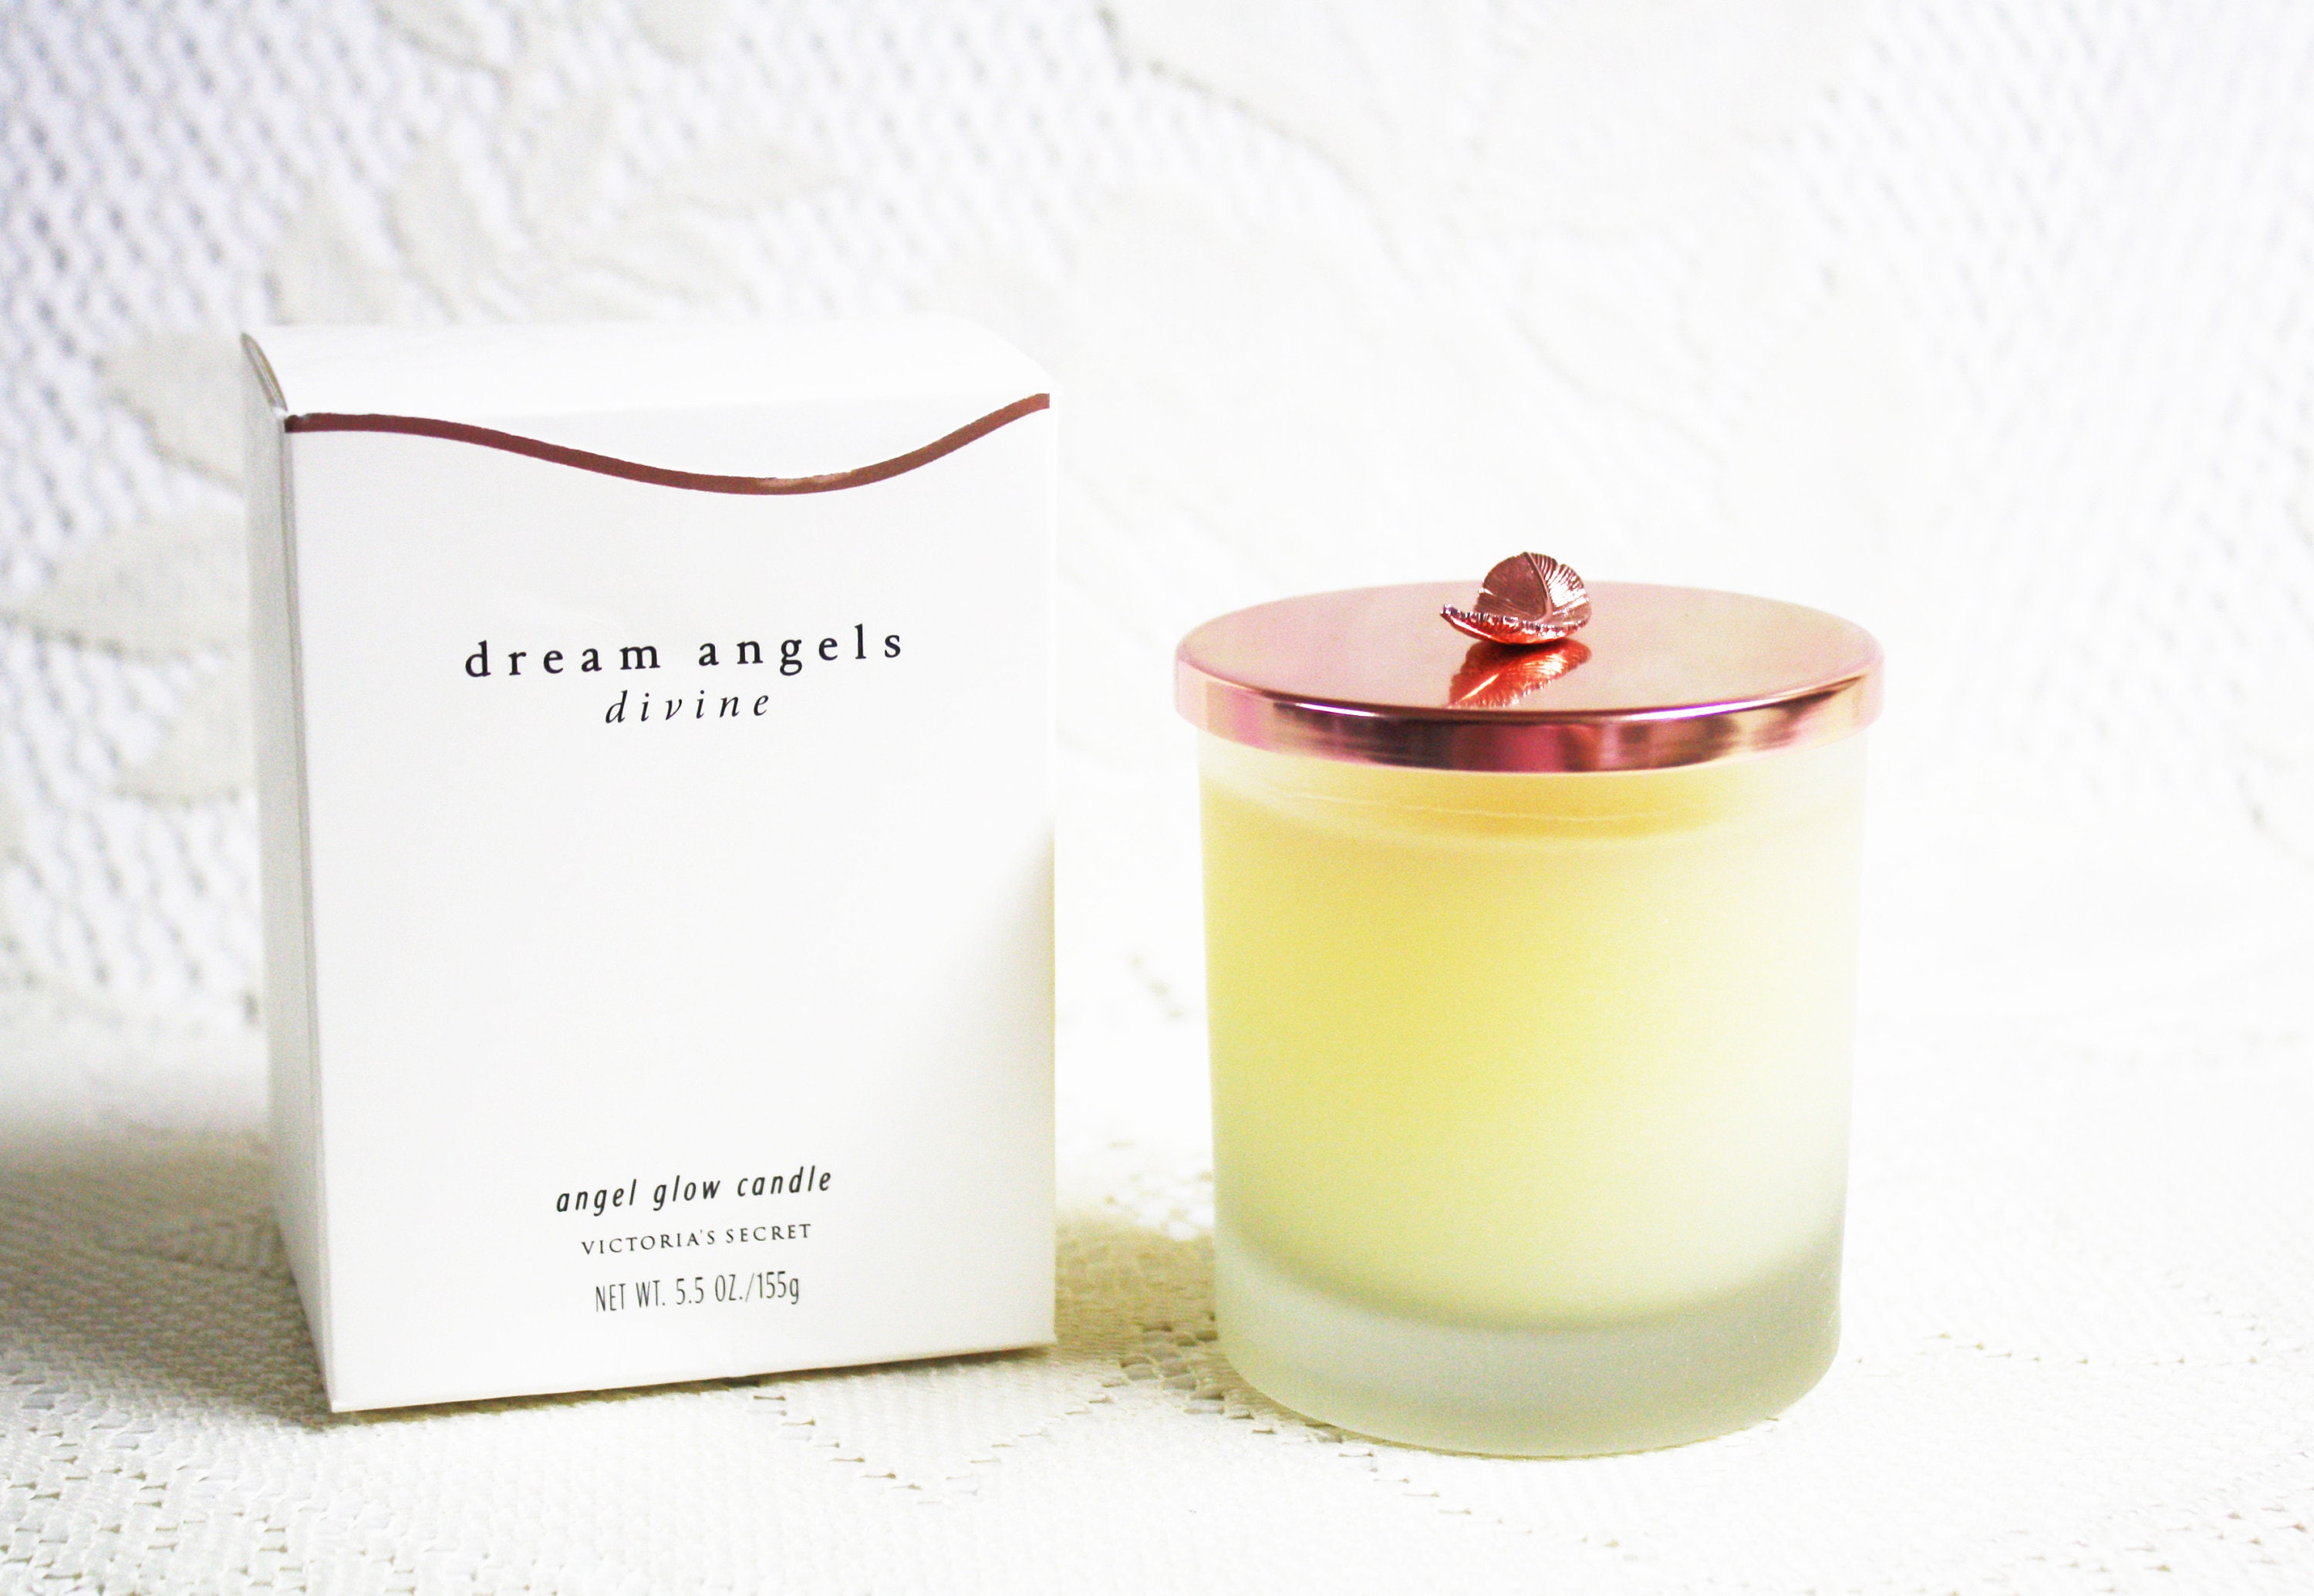 Victoria Secret Dream Angels Divine - Fragrance